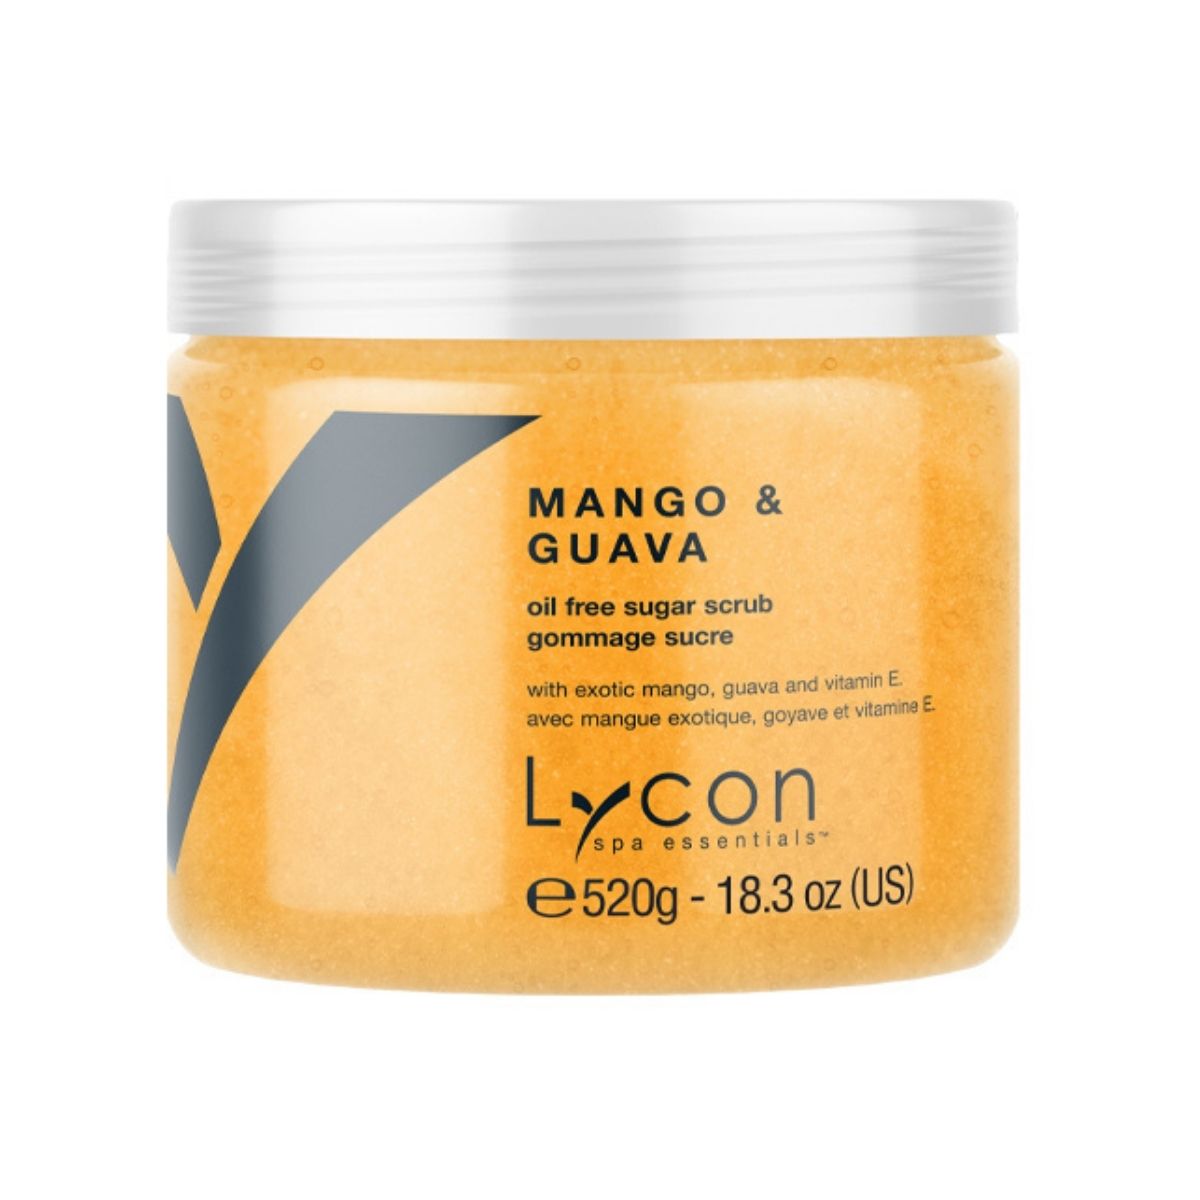 Lycon Mango & Guava Oil Free Sugar Scrub